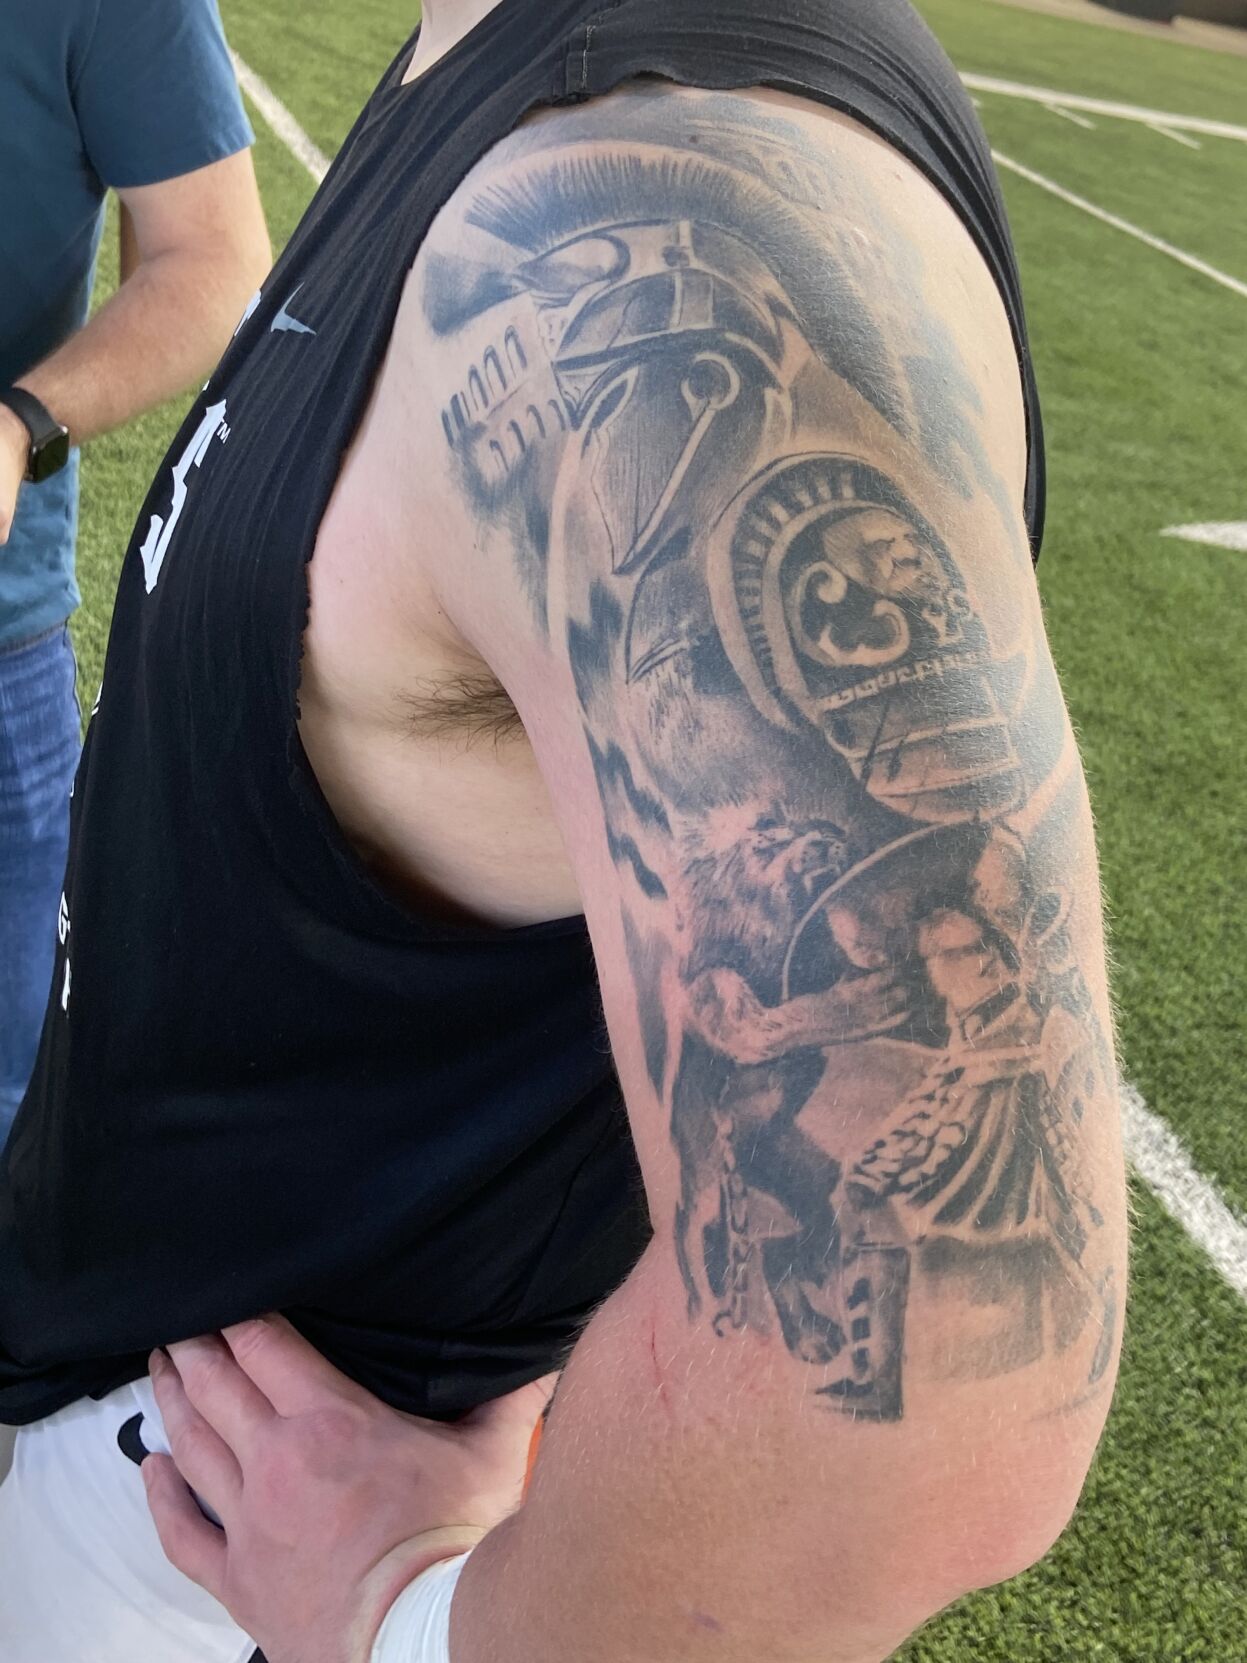 Maori style full sleeve tattoo on both arms